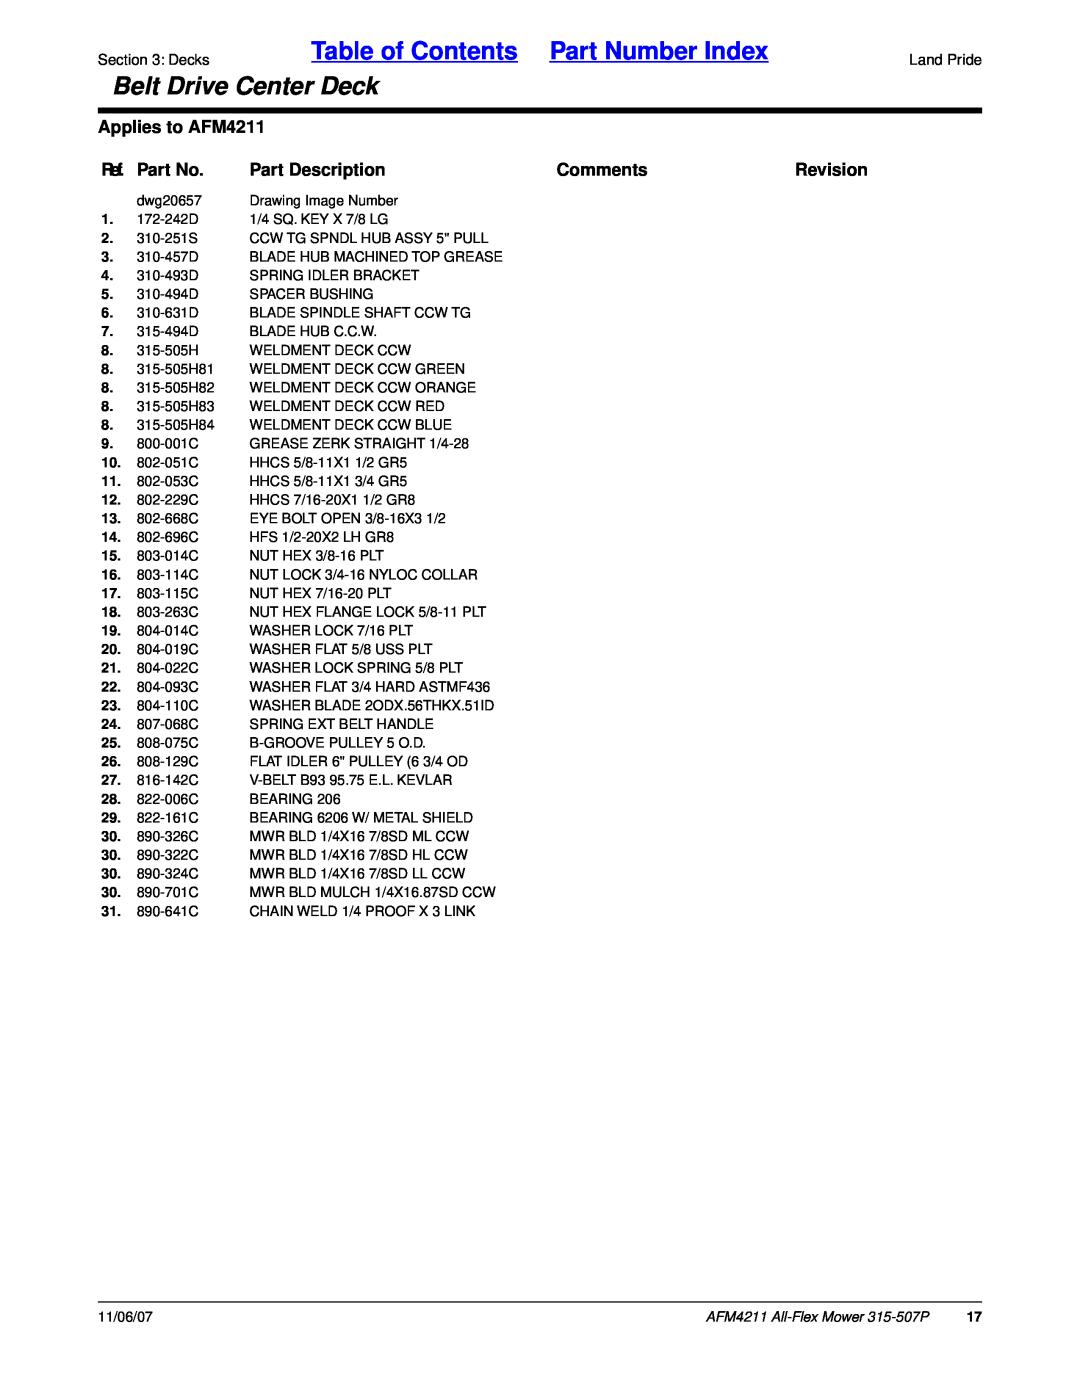 Land Pride 315-507P manual Table of Contents Part Number Index, Belt Drive Center Deck, Applies to AFM4211, Ref. Part No 